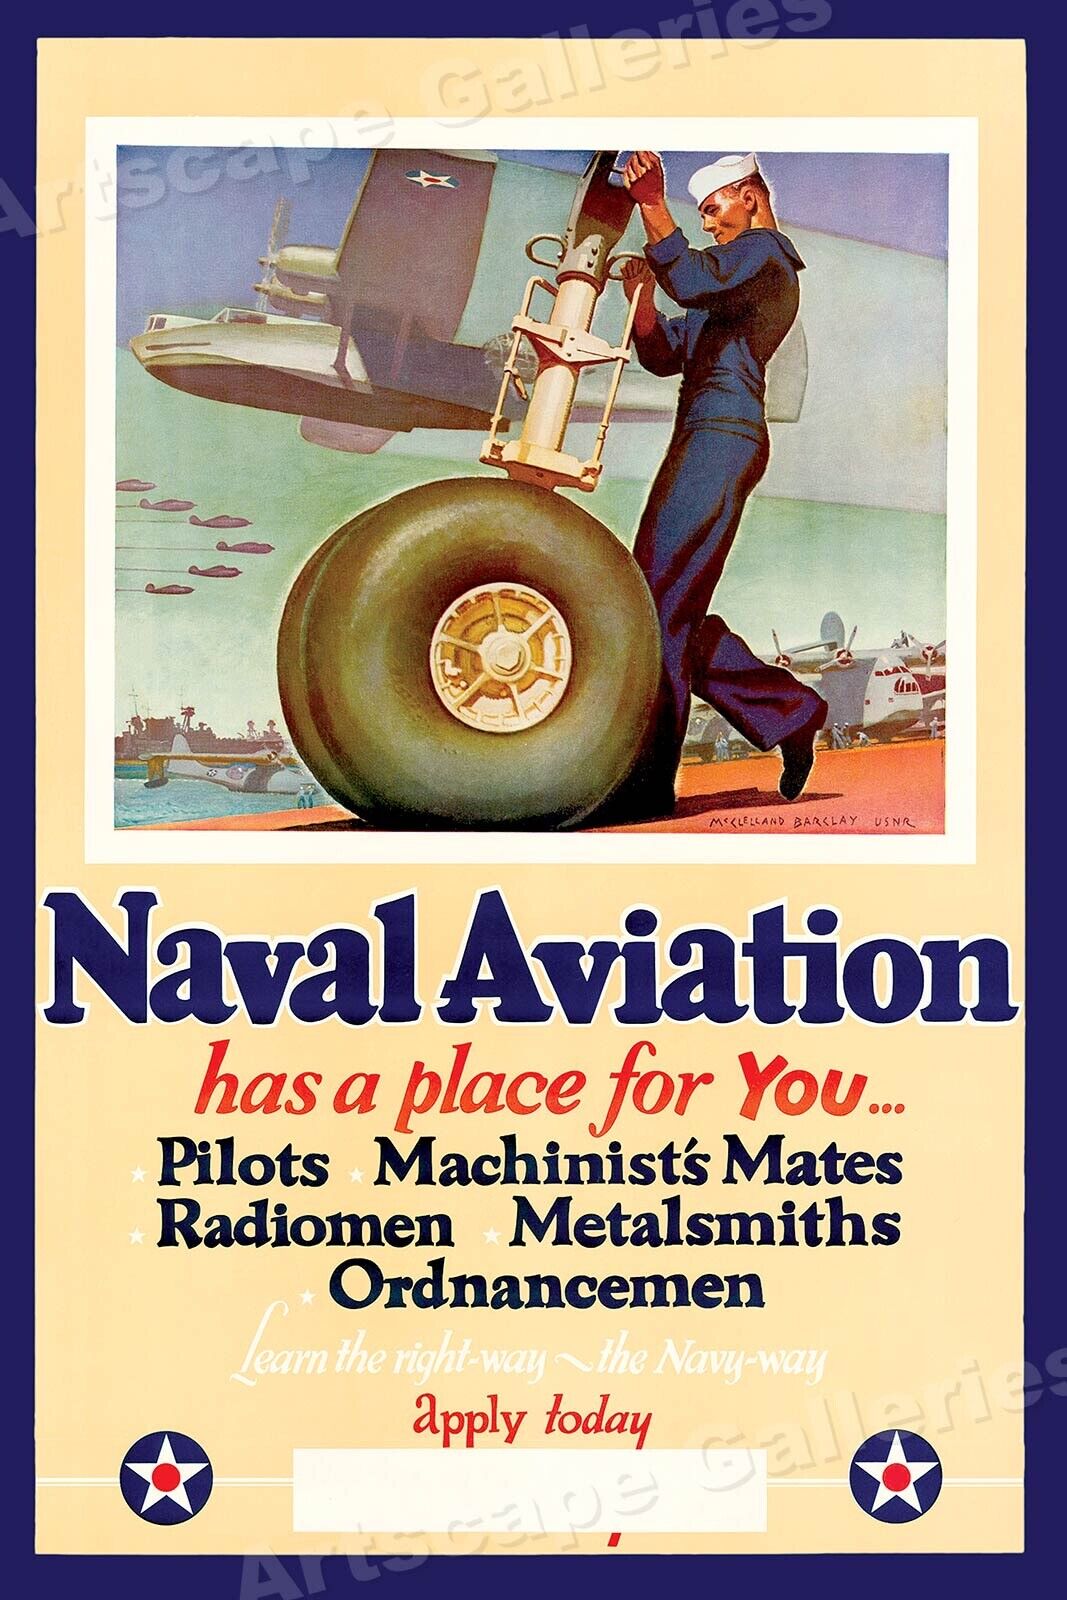 Enlist in Naval Aviation 1940s World War 2 Vintage Navy Poster - 16x24